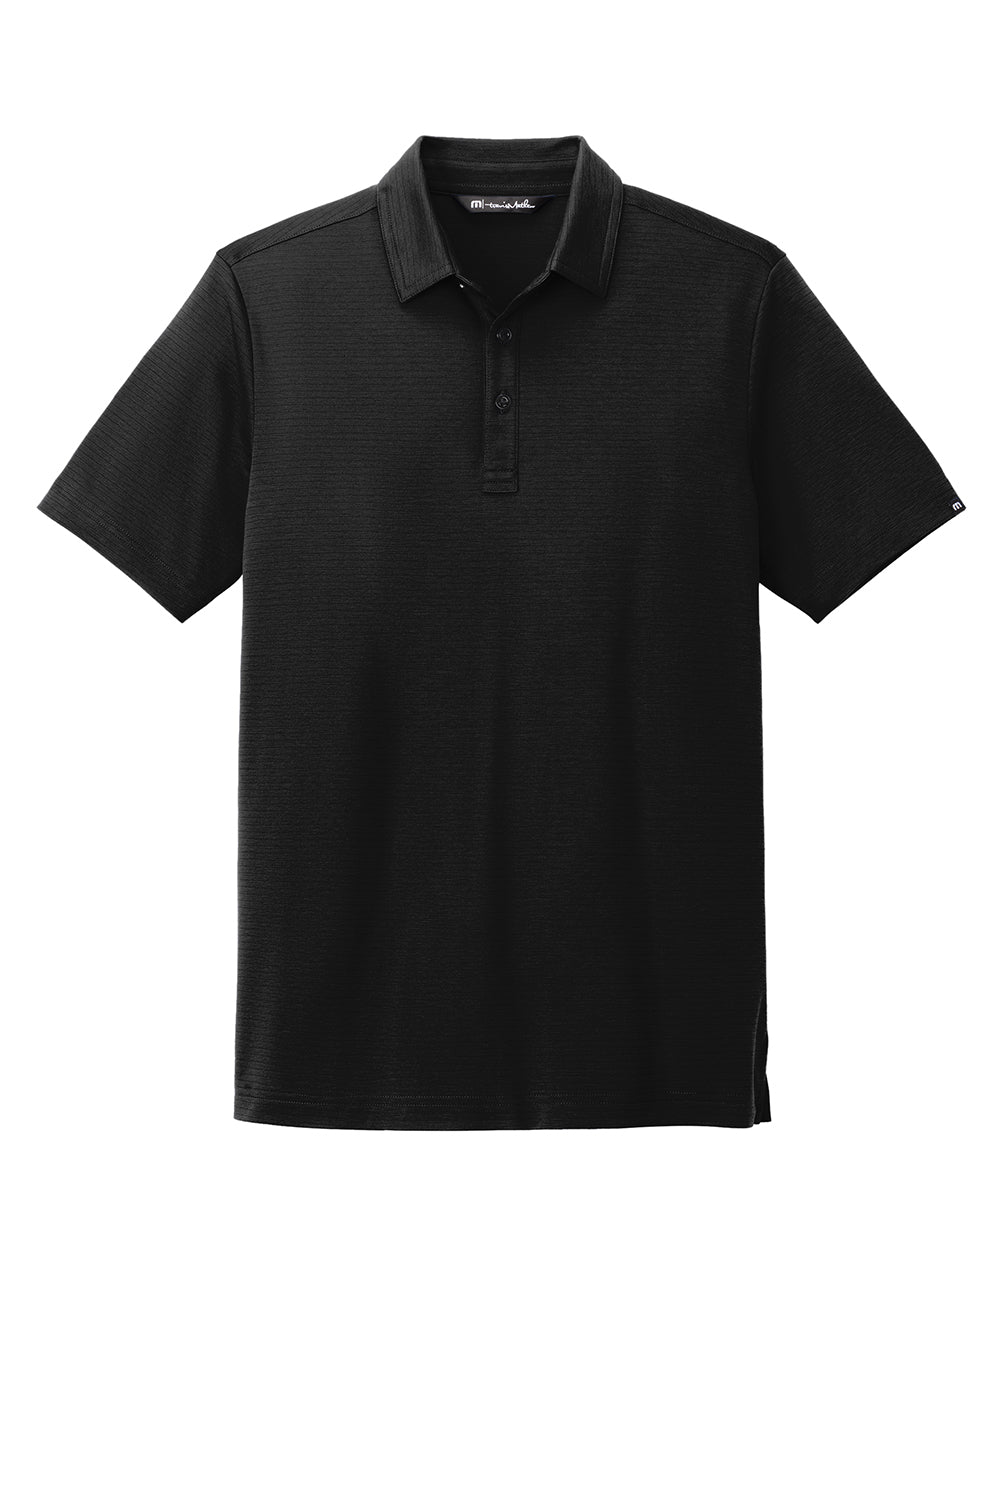 TravisMathew TM1MY399 Mens Bayfront Moisture Wicking Short Sleeve Polo Shirt Black Flat Front